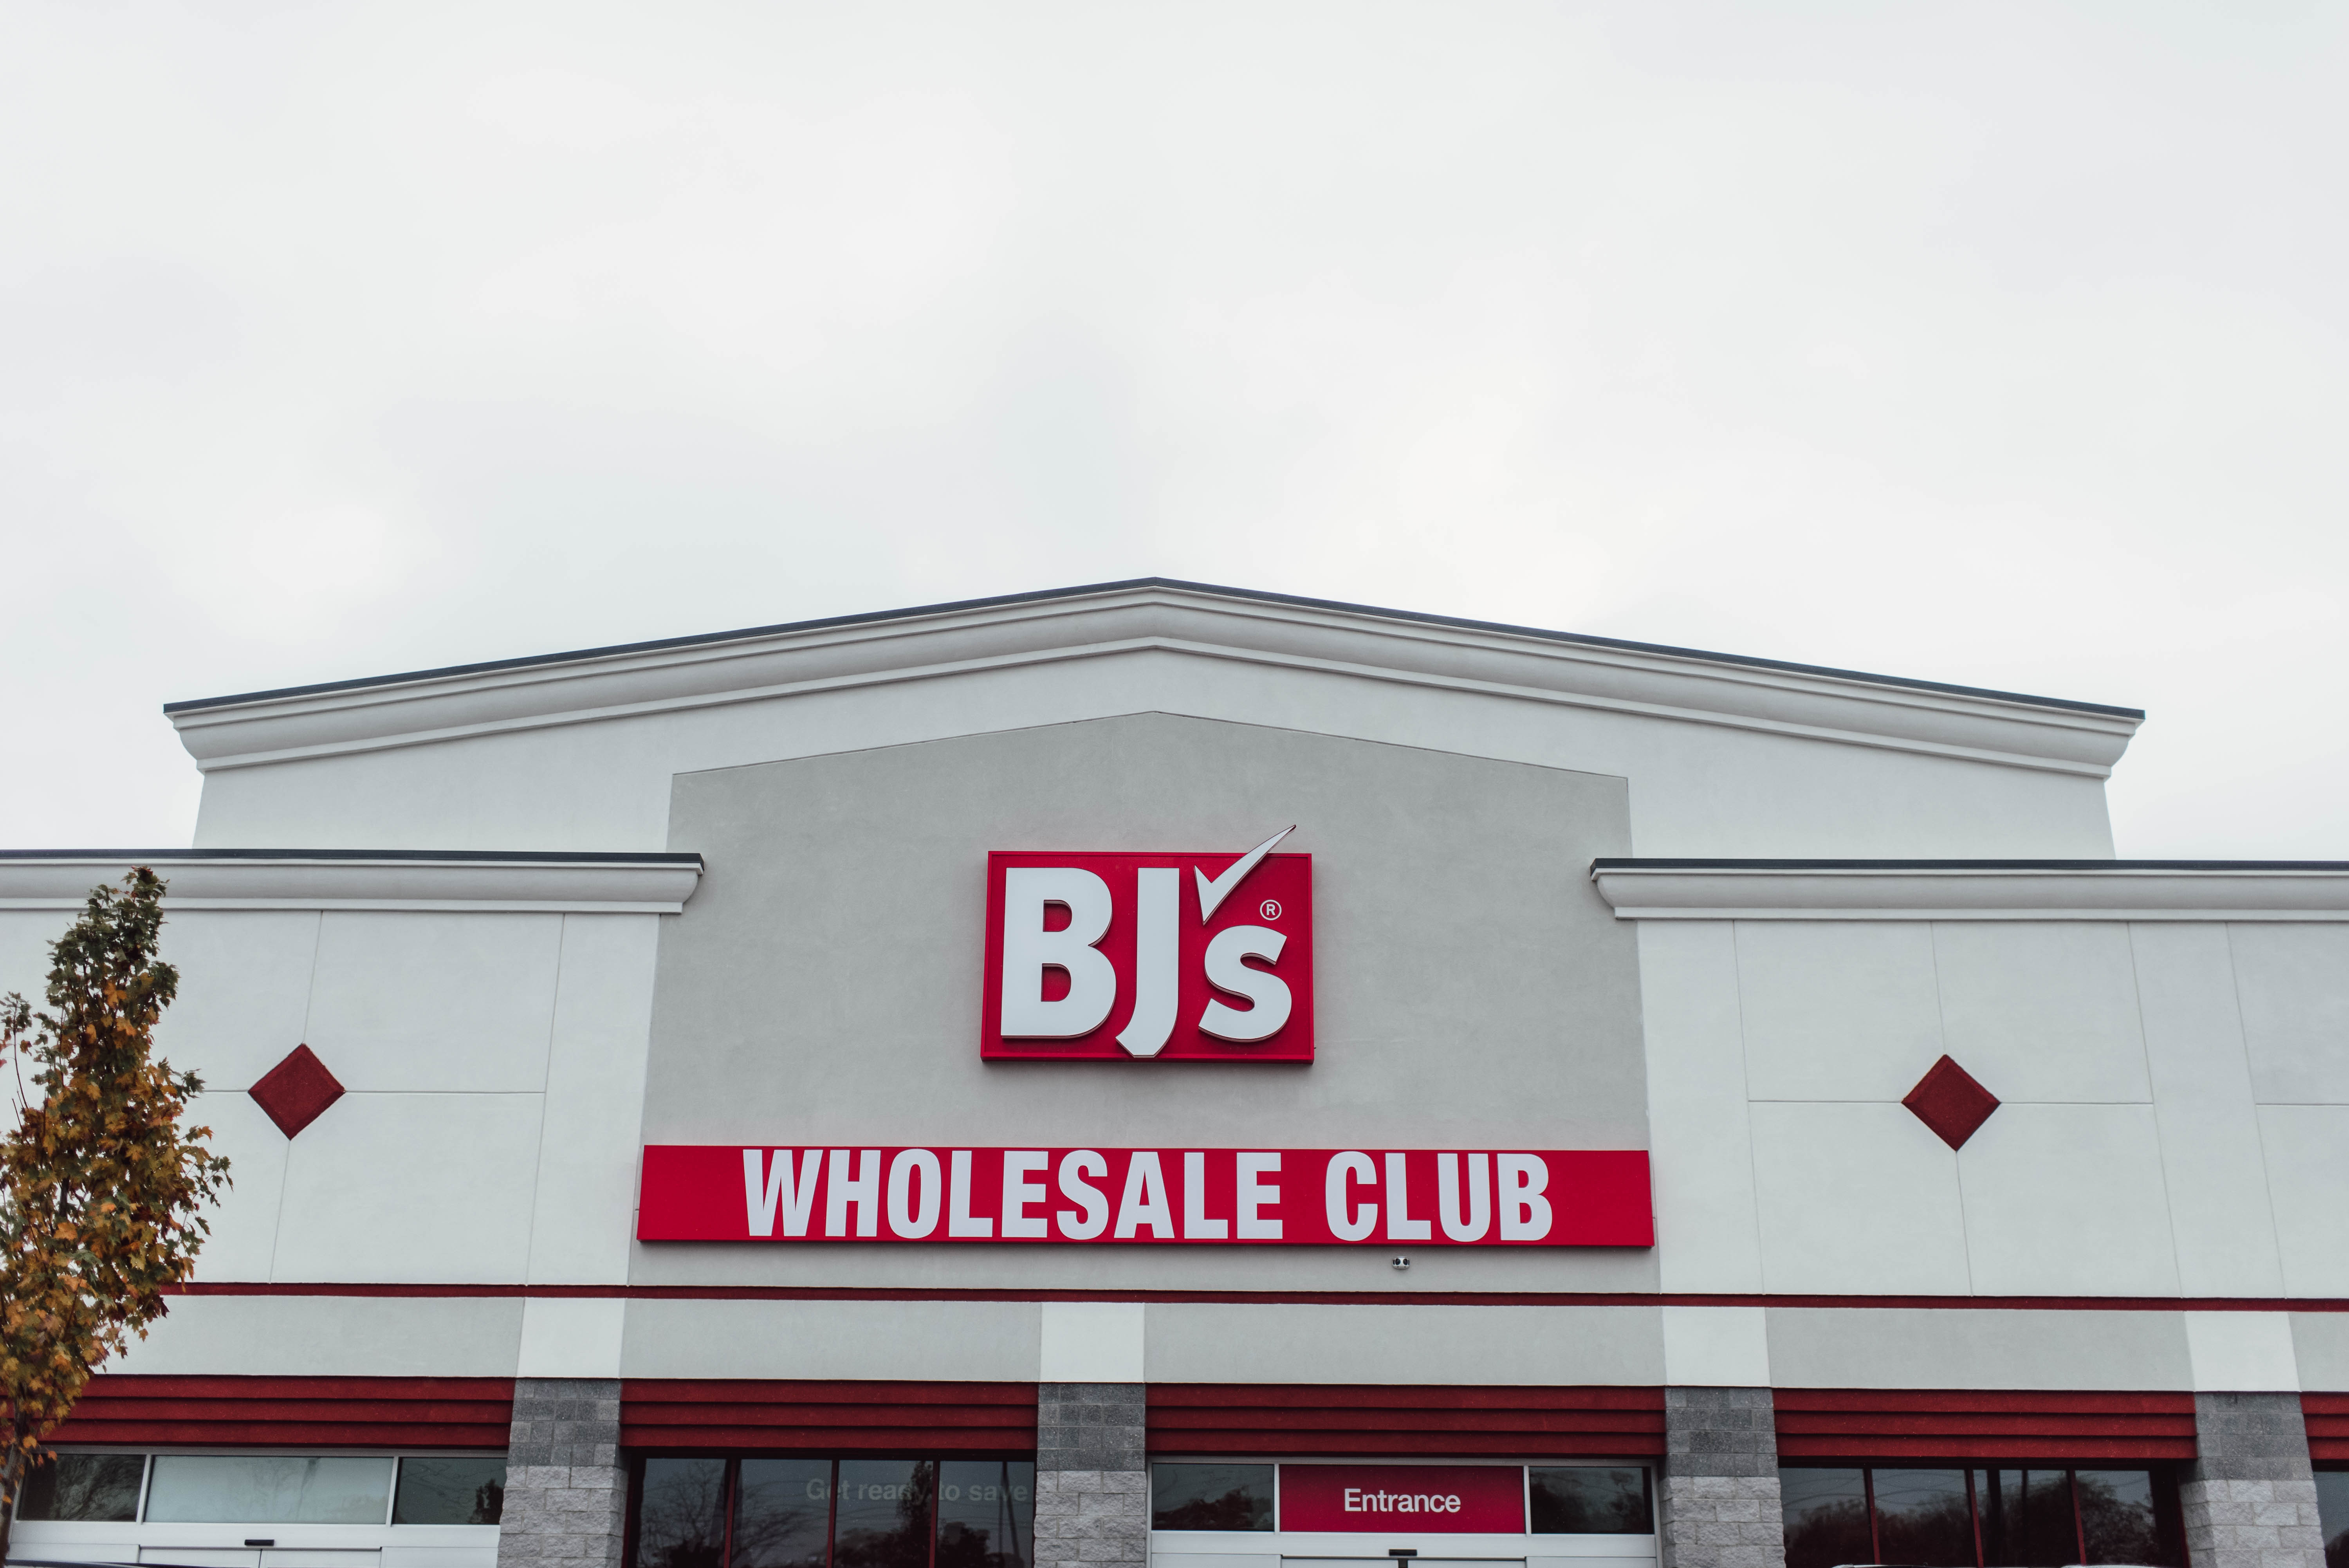  BJ's Wholesale Club